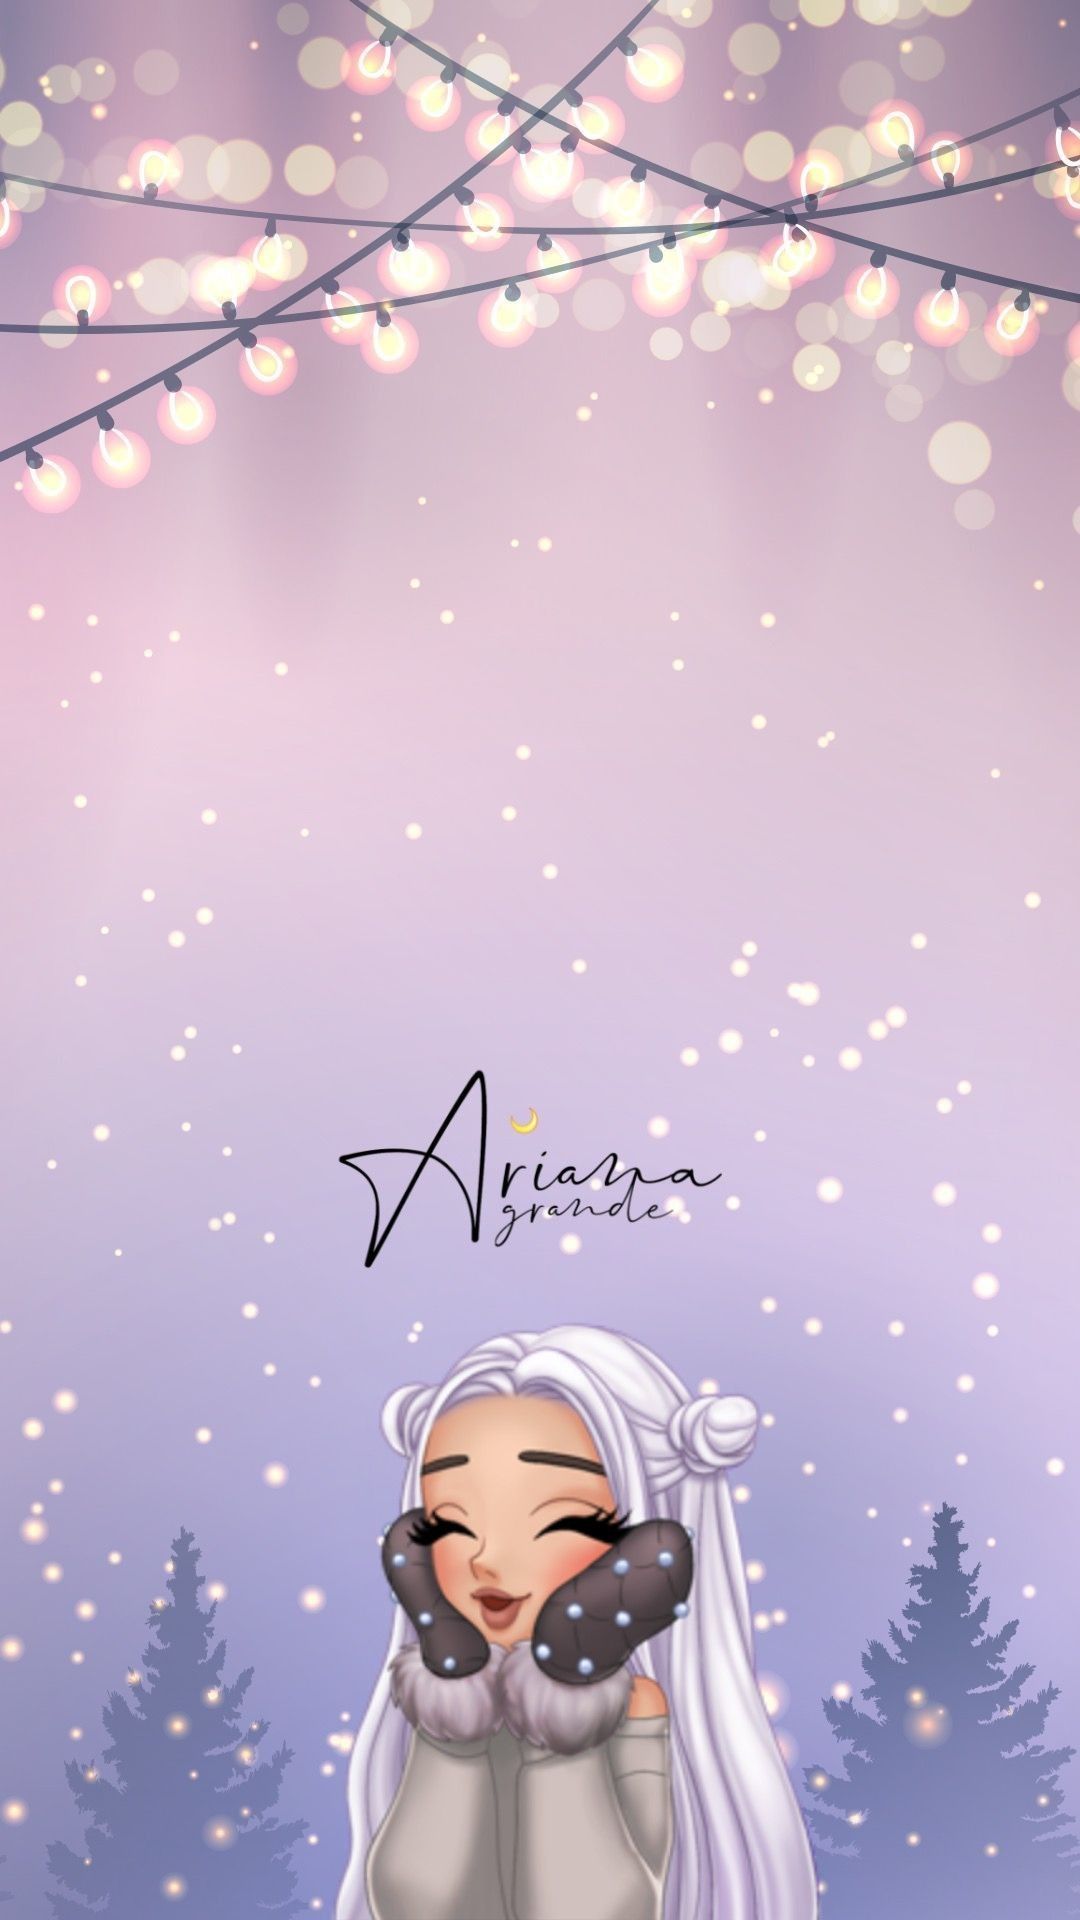 Ariana Christmas. Disney princess рисунки, Милые рисунки, Рисунки девушки